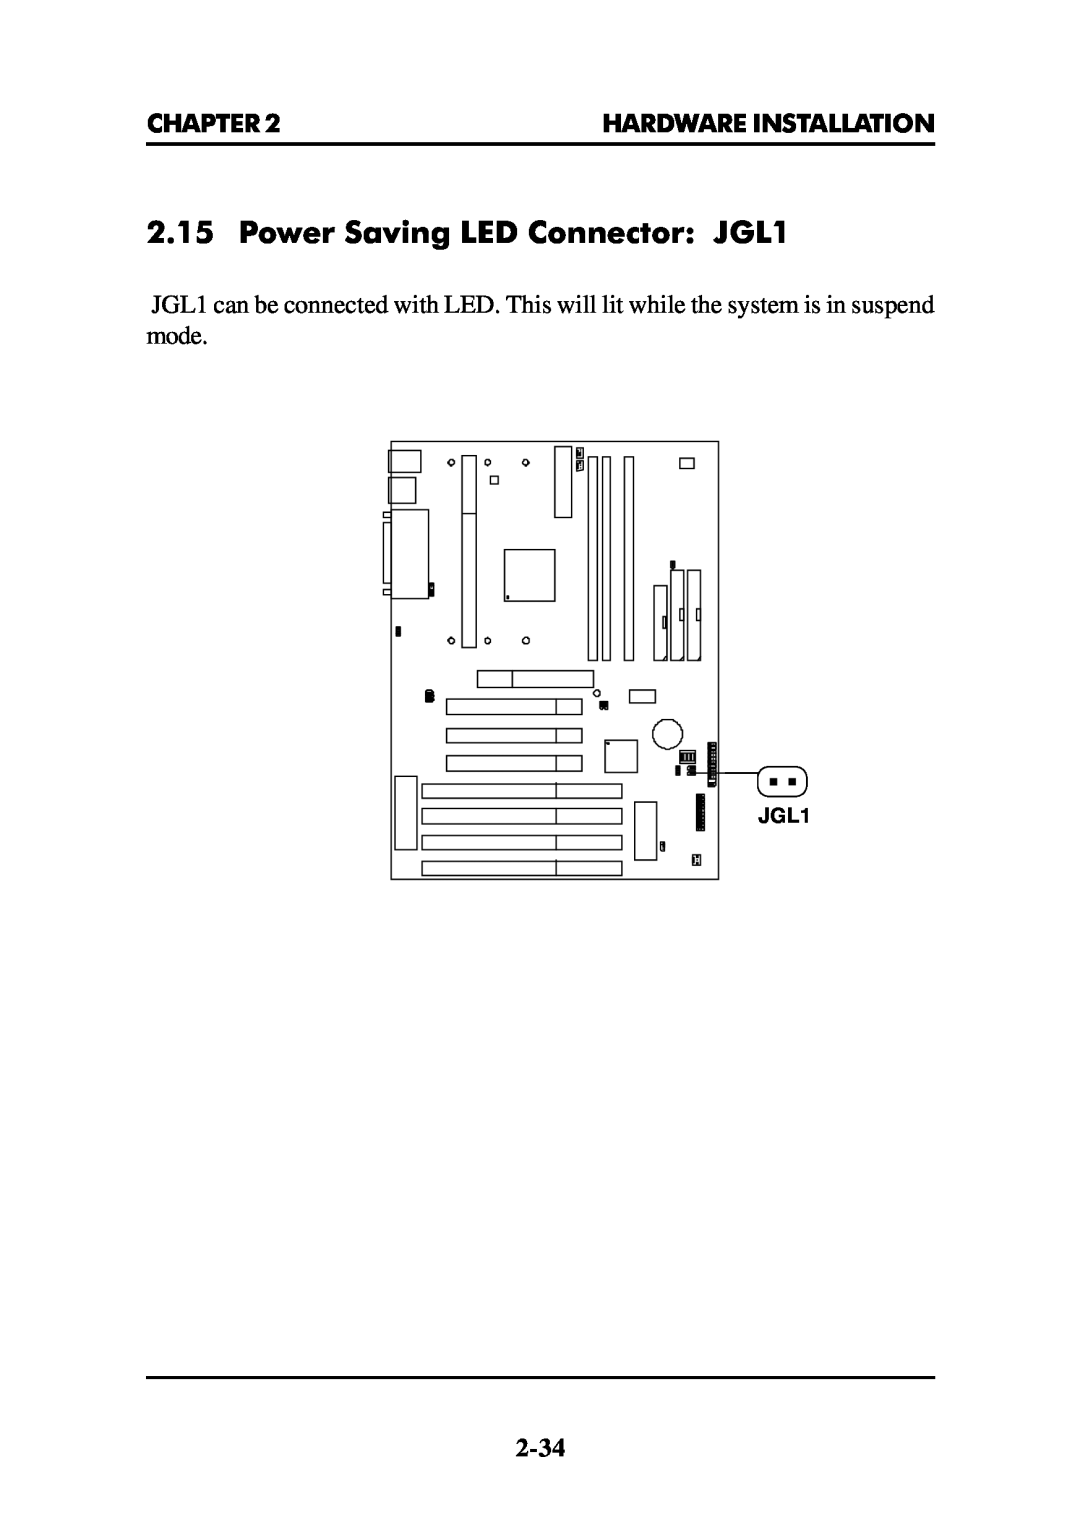 Intel MS-6112 manual Power Saving LED Connector JGL1, Chapter, Hardware Installation 